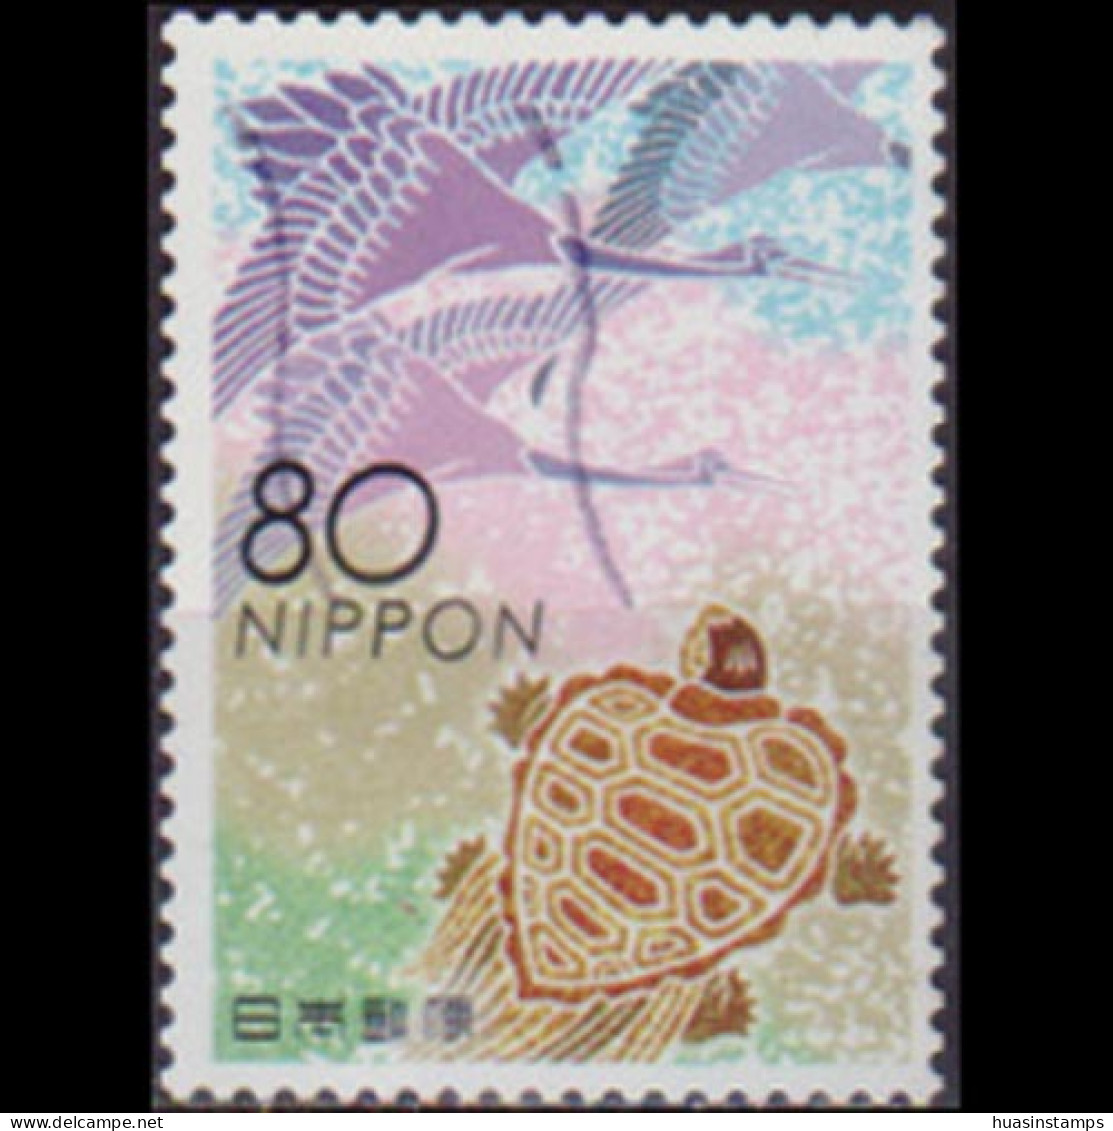 JAPAN 2002 - Scott# 2851e Cranes 80y Used - Usados